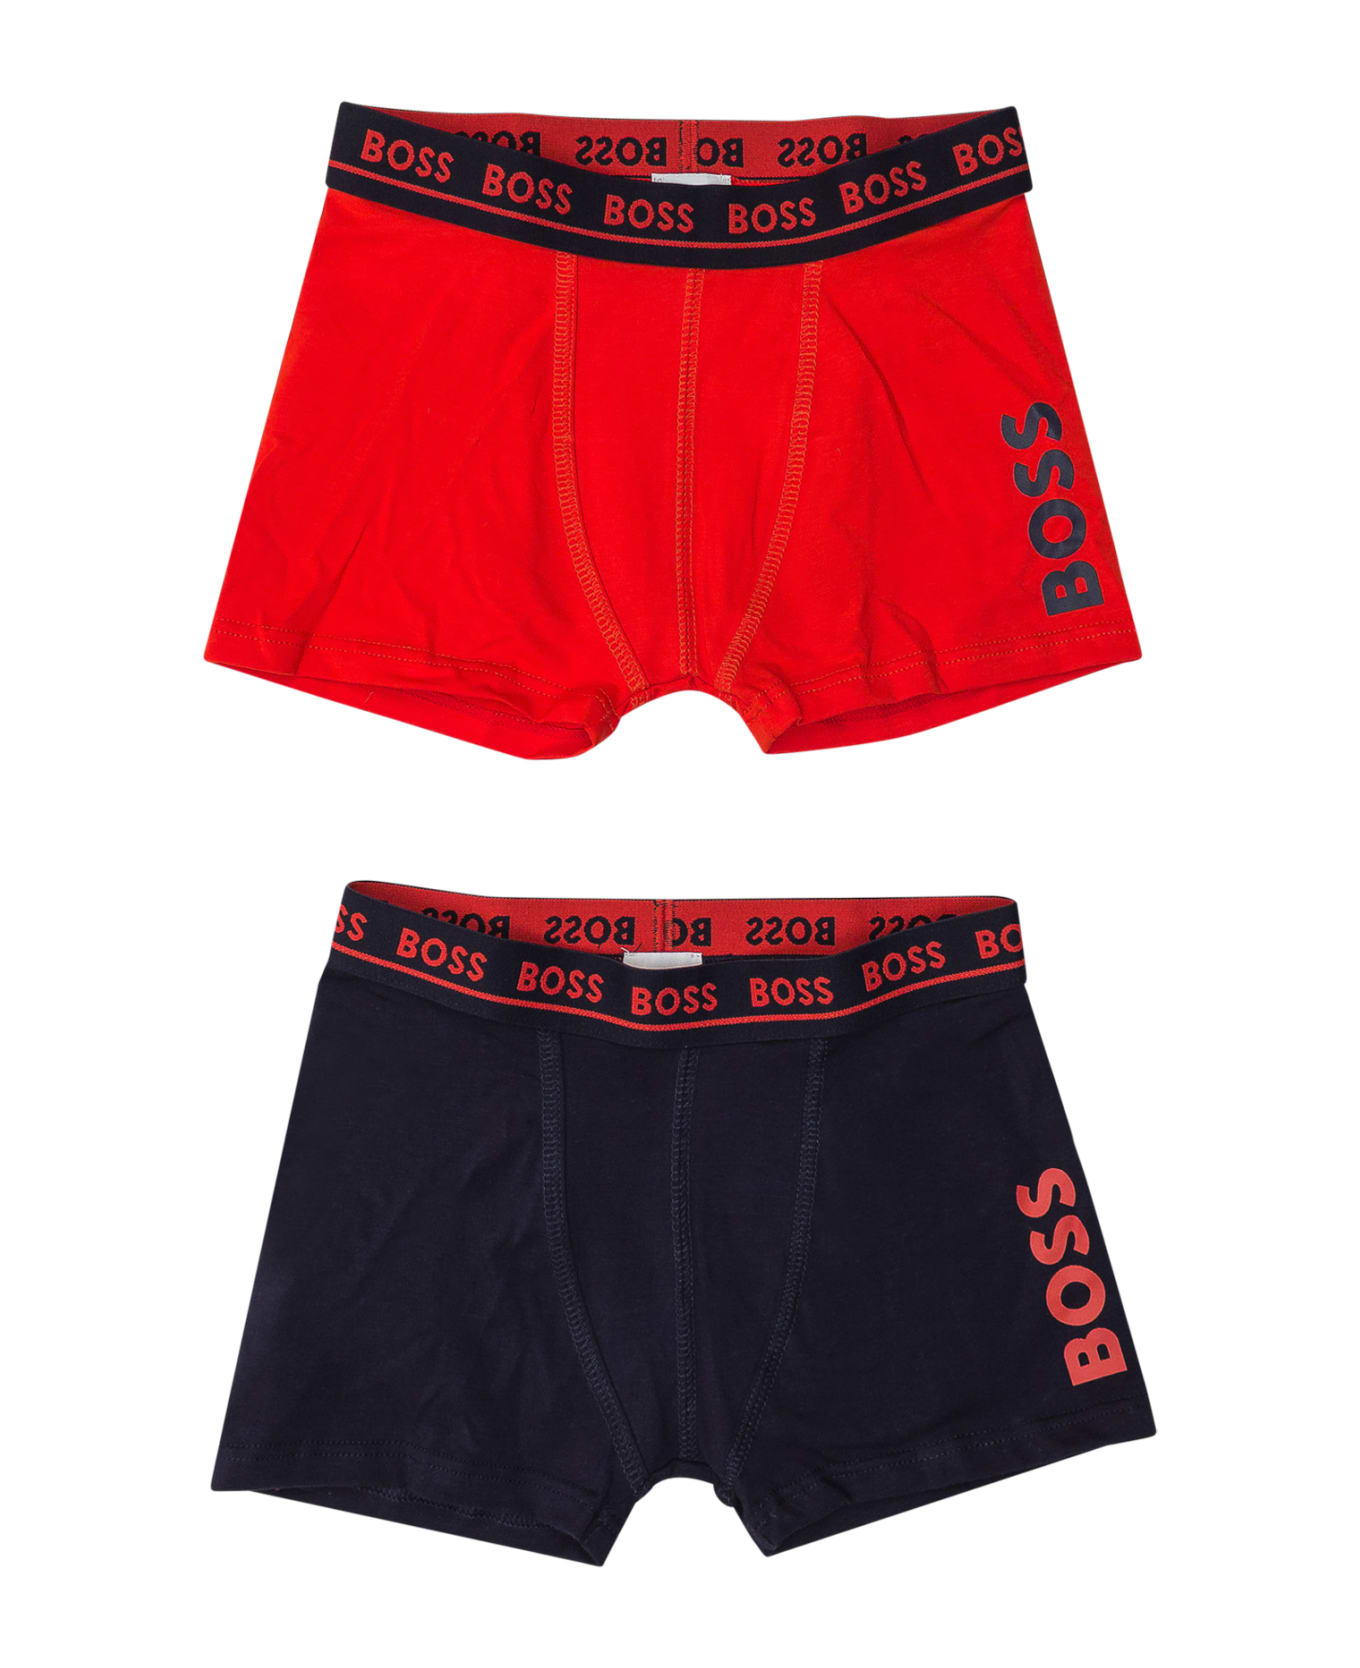 Hugo Boss Set 2 Boxer Shorts - 992